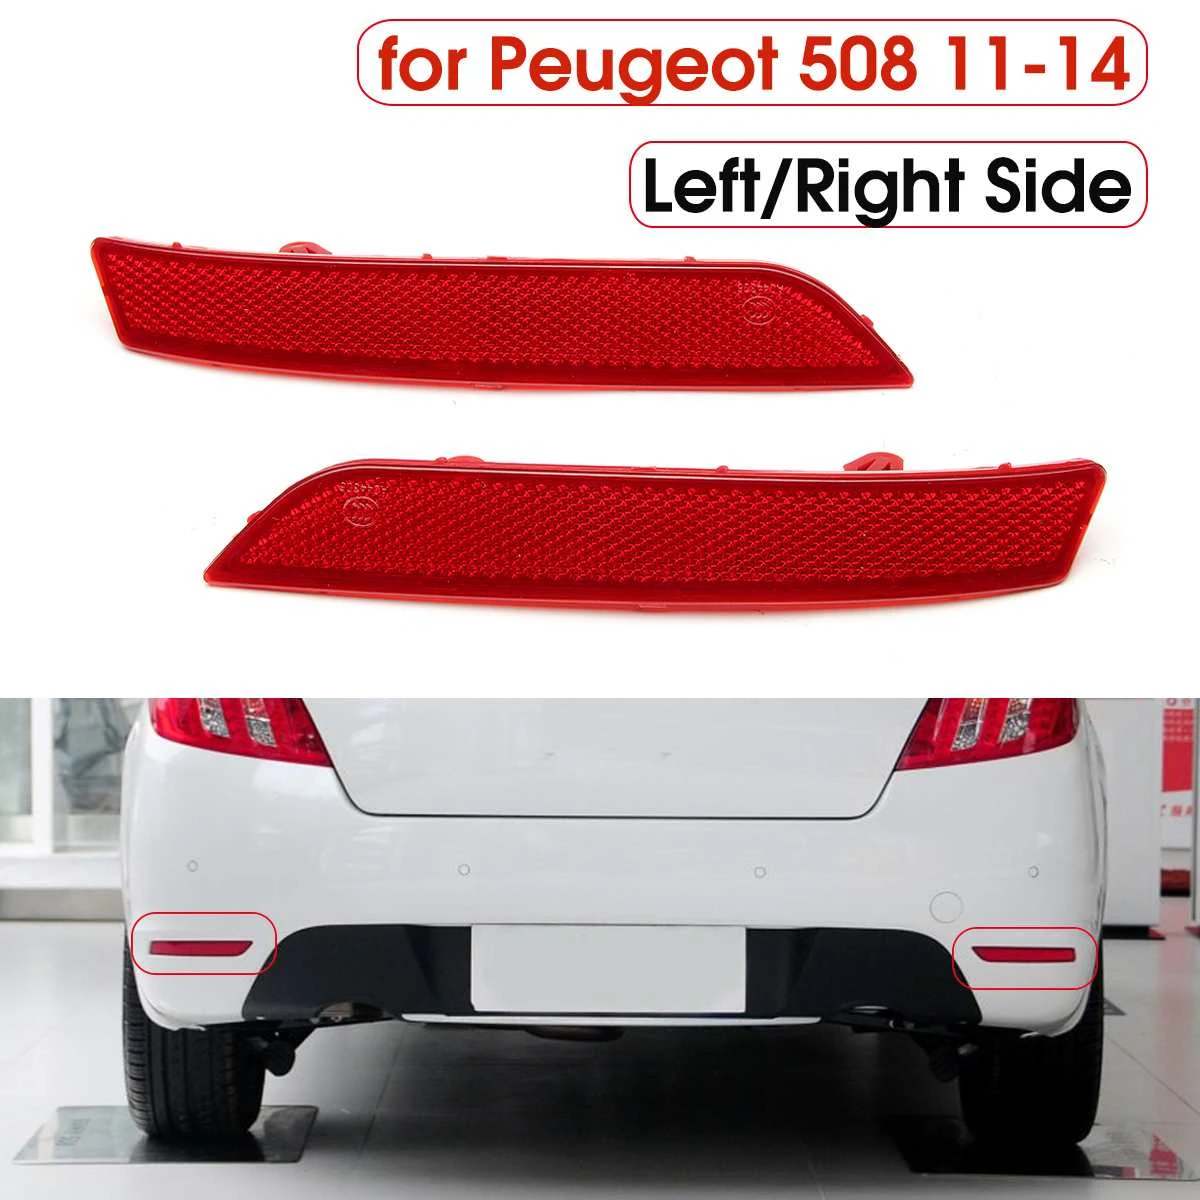 Left Side For Peugeot 508 2011-2014 Rear Bumper Light Reflector Tail Lamp